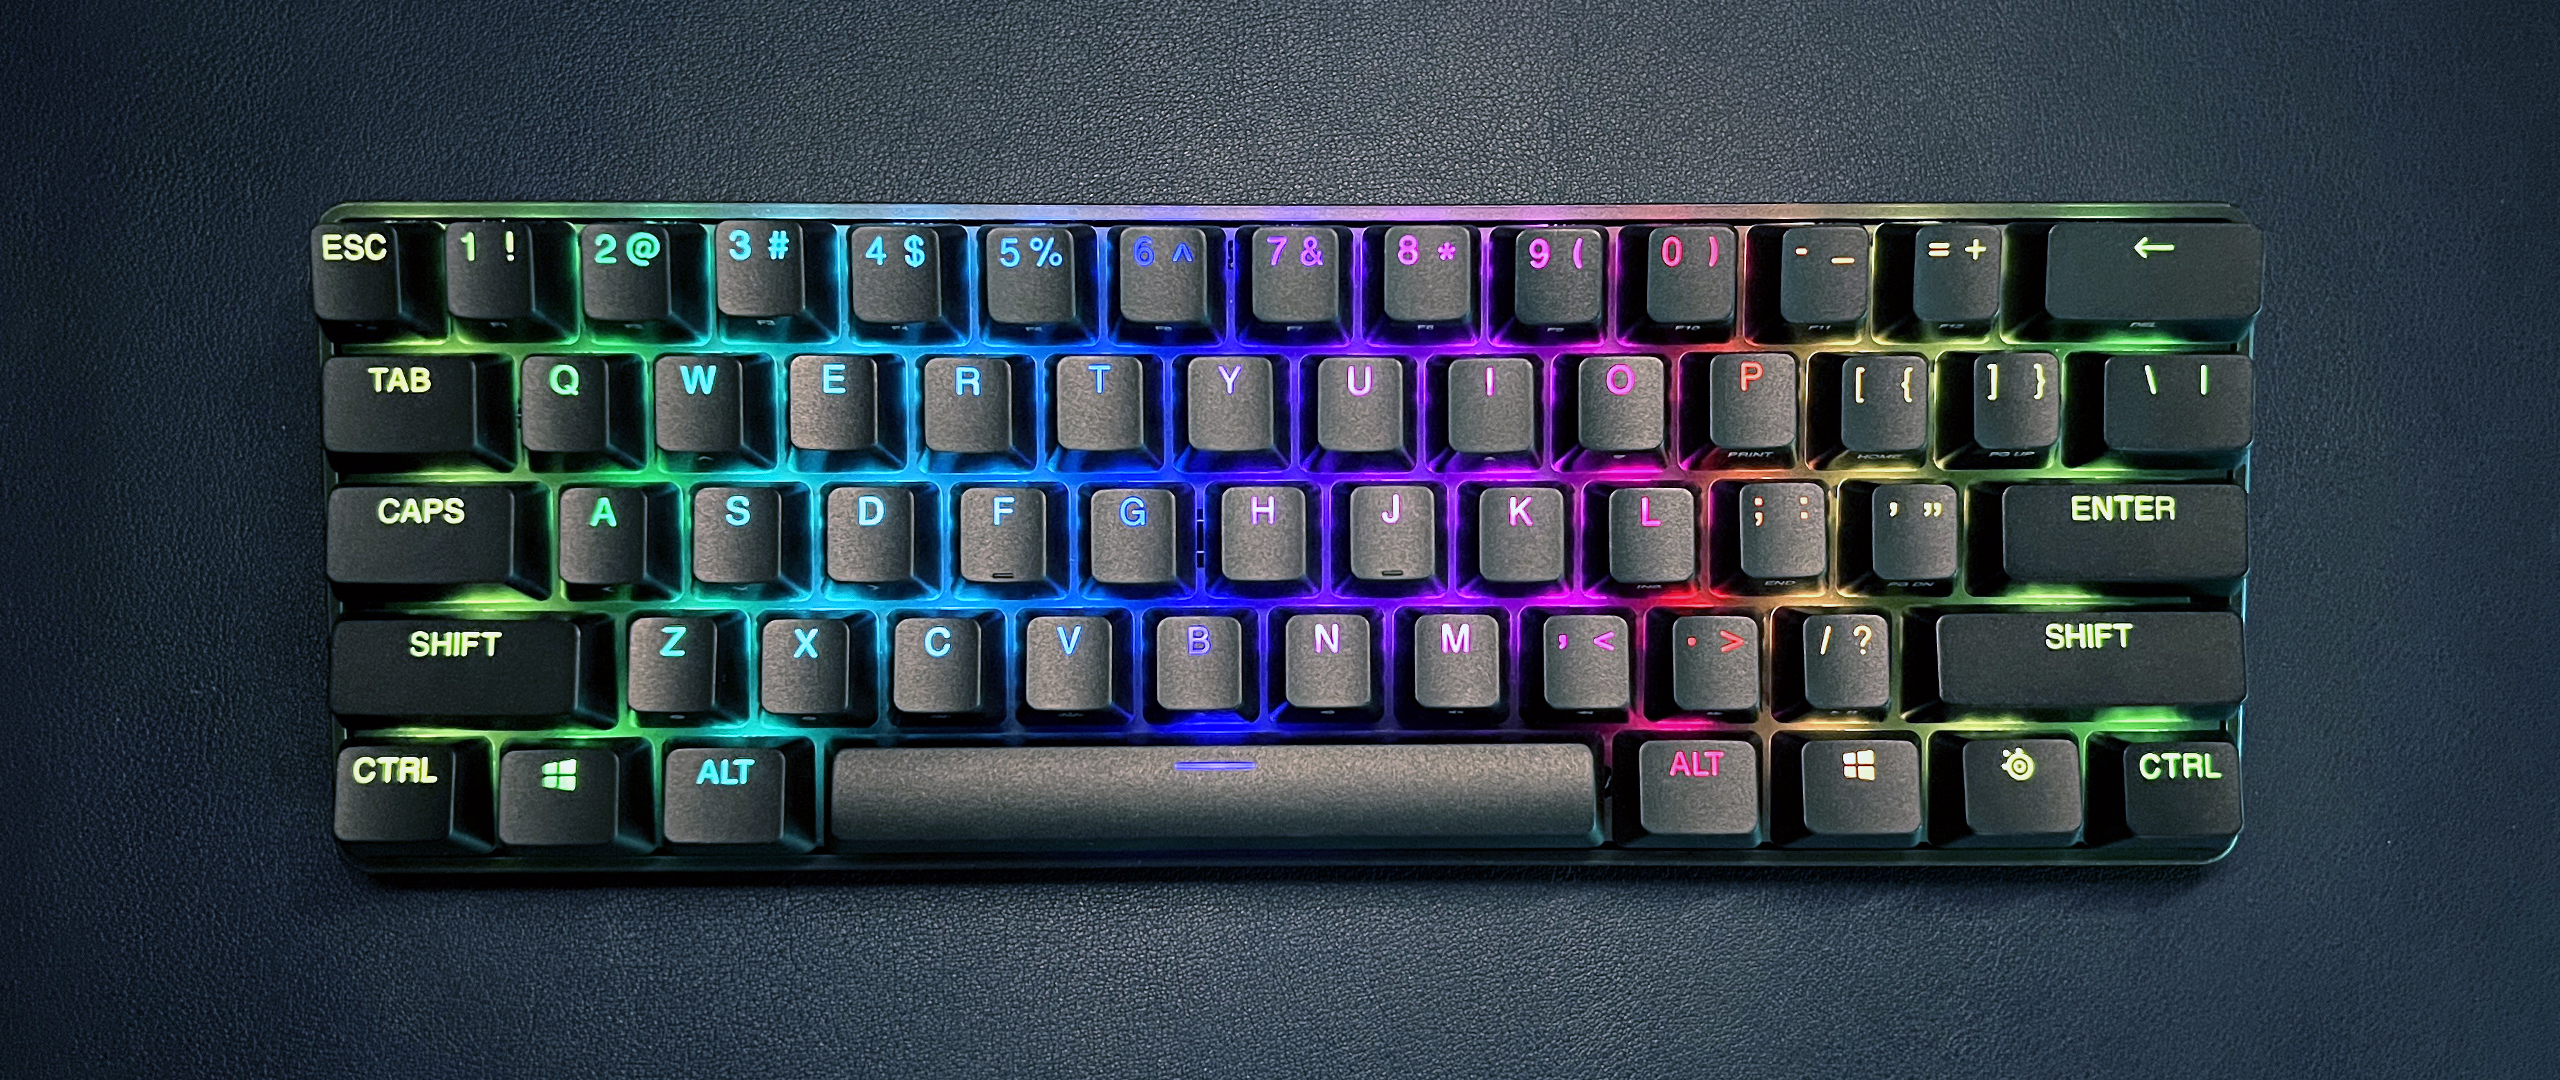 Best Mini Gaming Keyboard: SteelSeries Apex Pro Mini